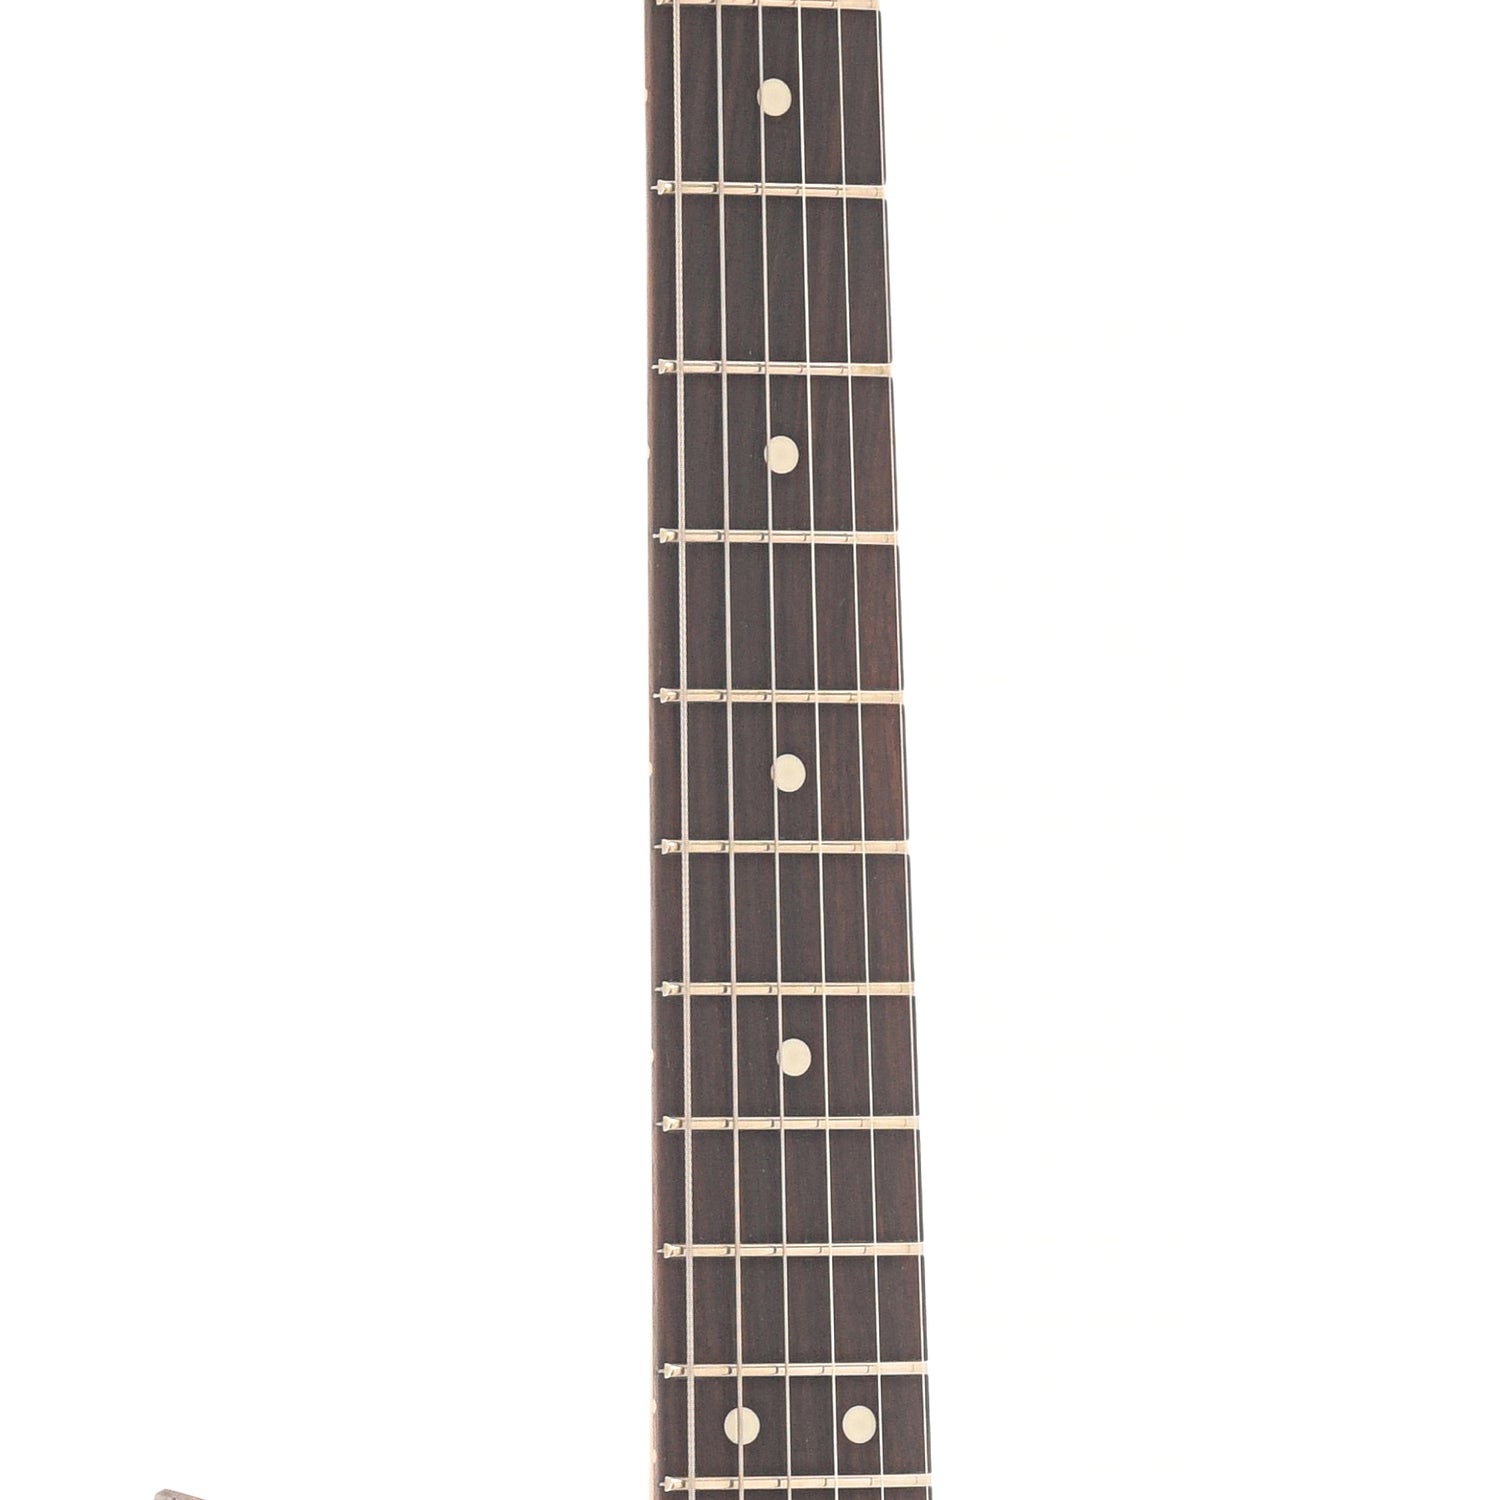 Fretboard of Fender American Standard Stratocaster